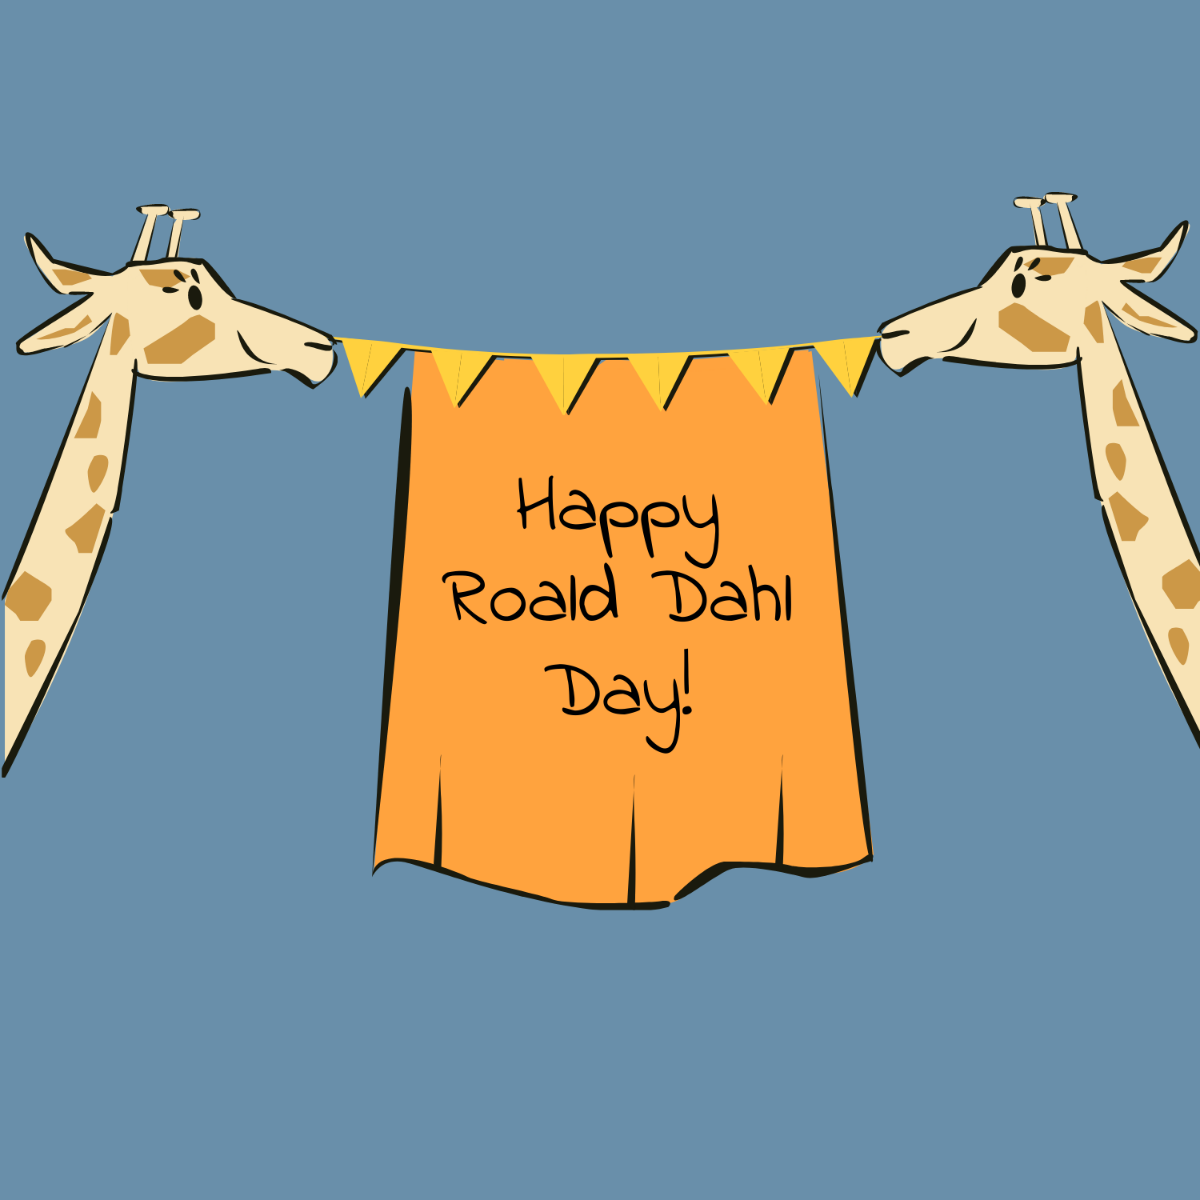 Roald Dahl Day Cartoon Vector Template